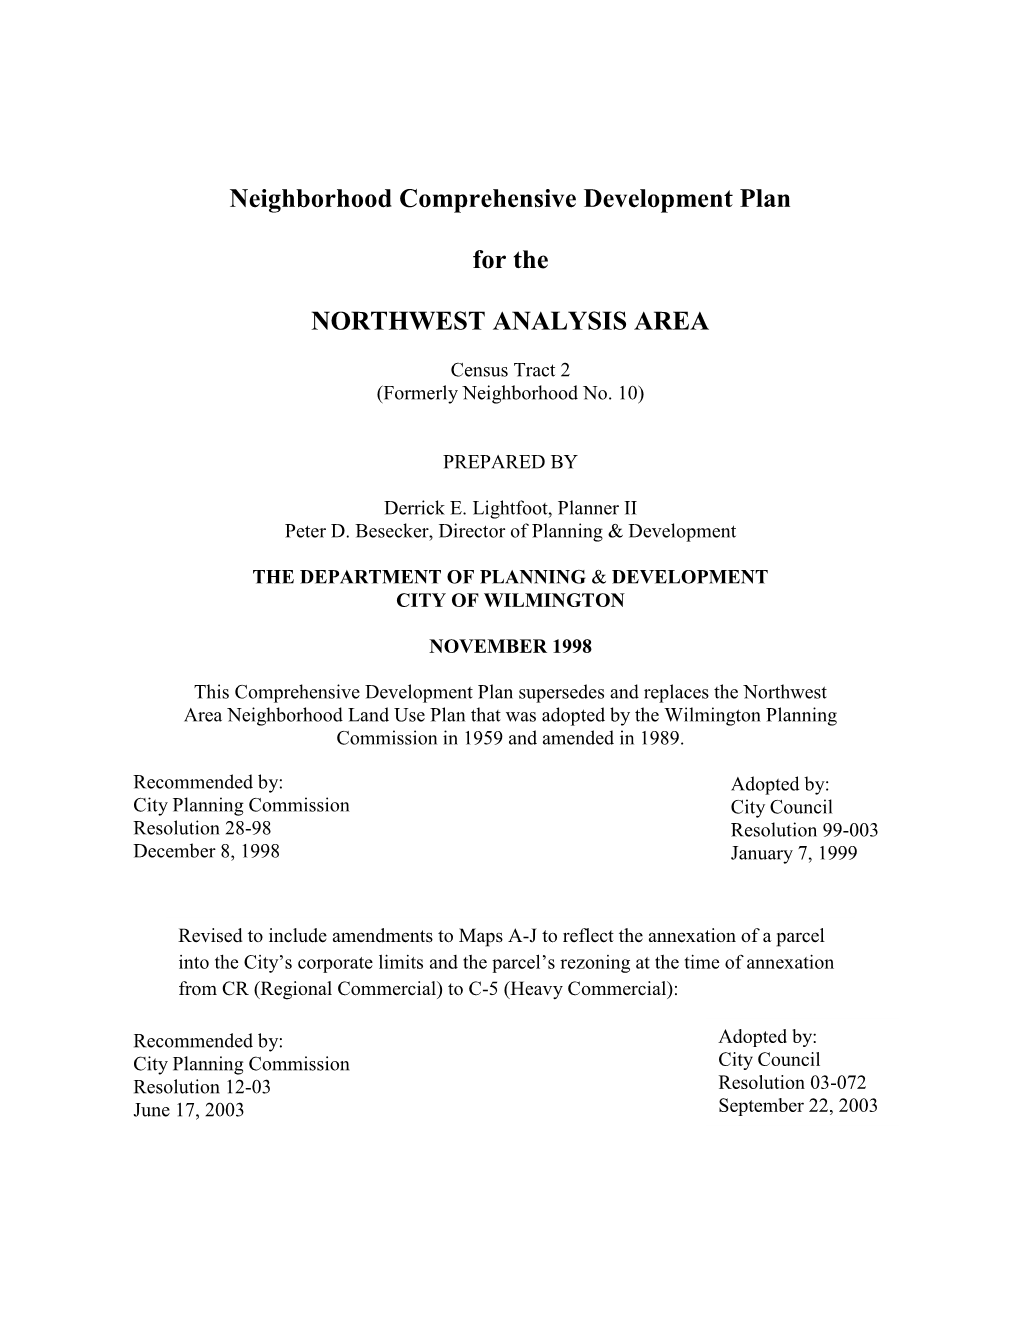 Neighborhood Comprehensive Development Plan for the NORTHWEST ANALYSIS AREA